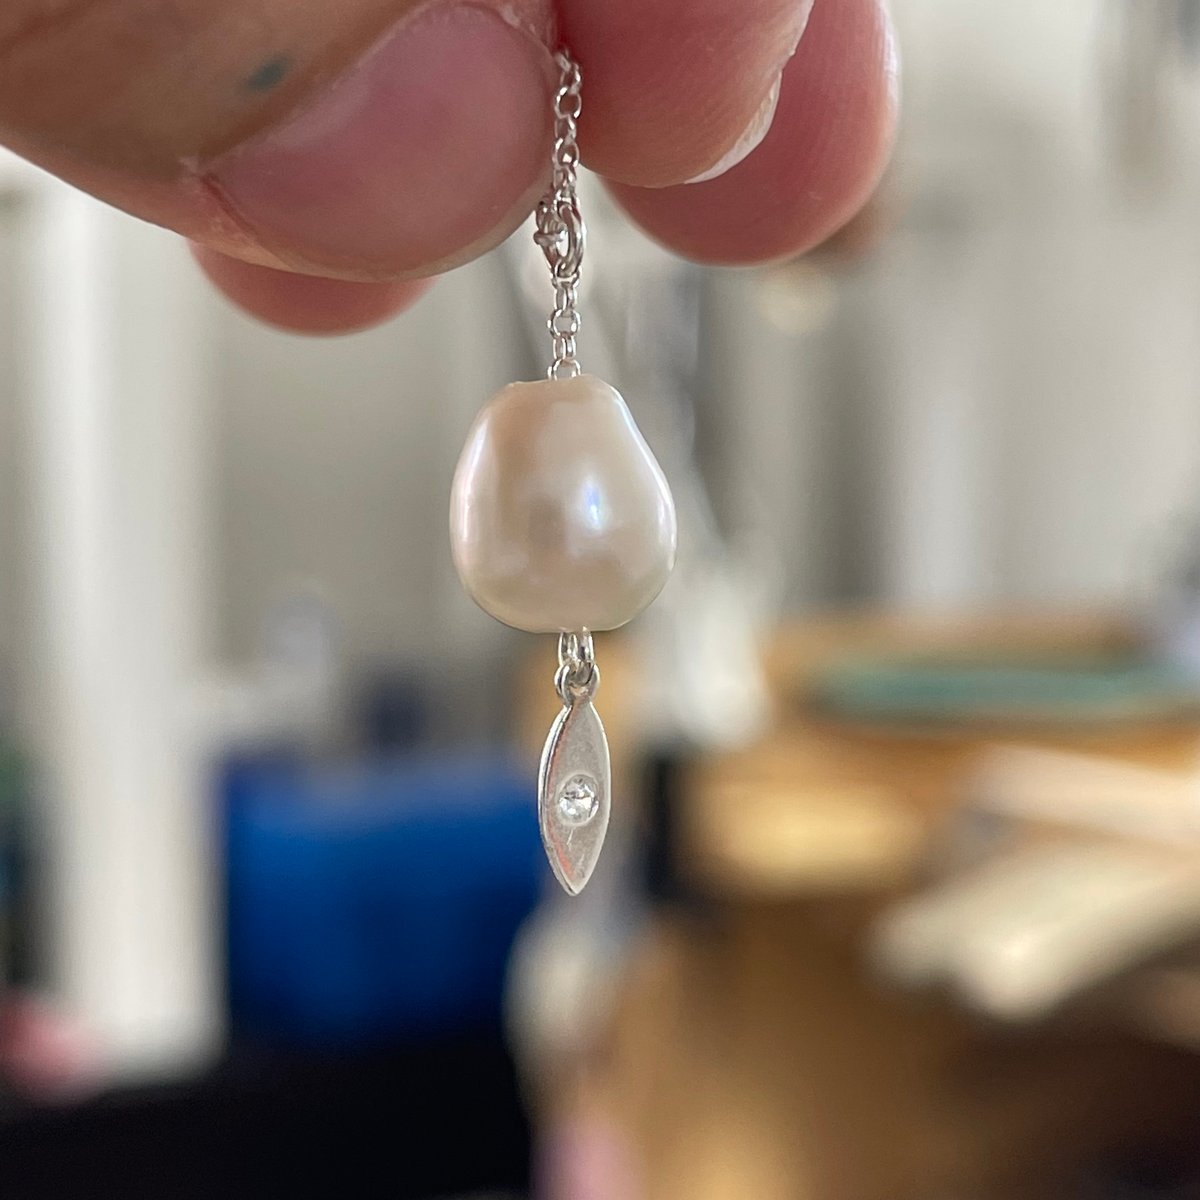 Image of unique pearl charm